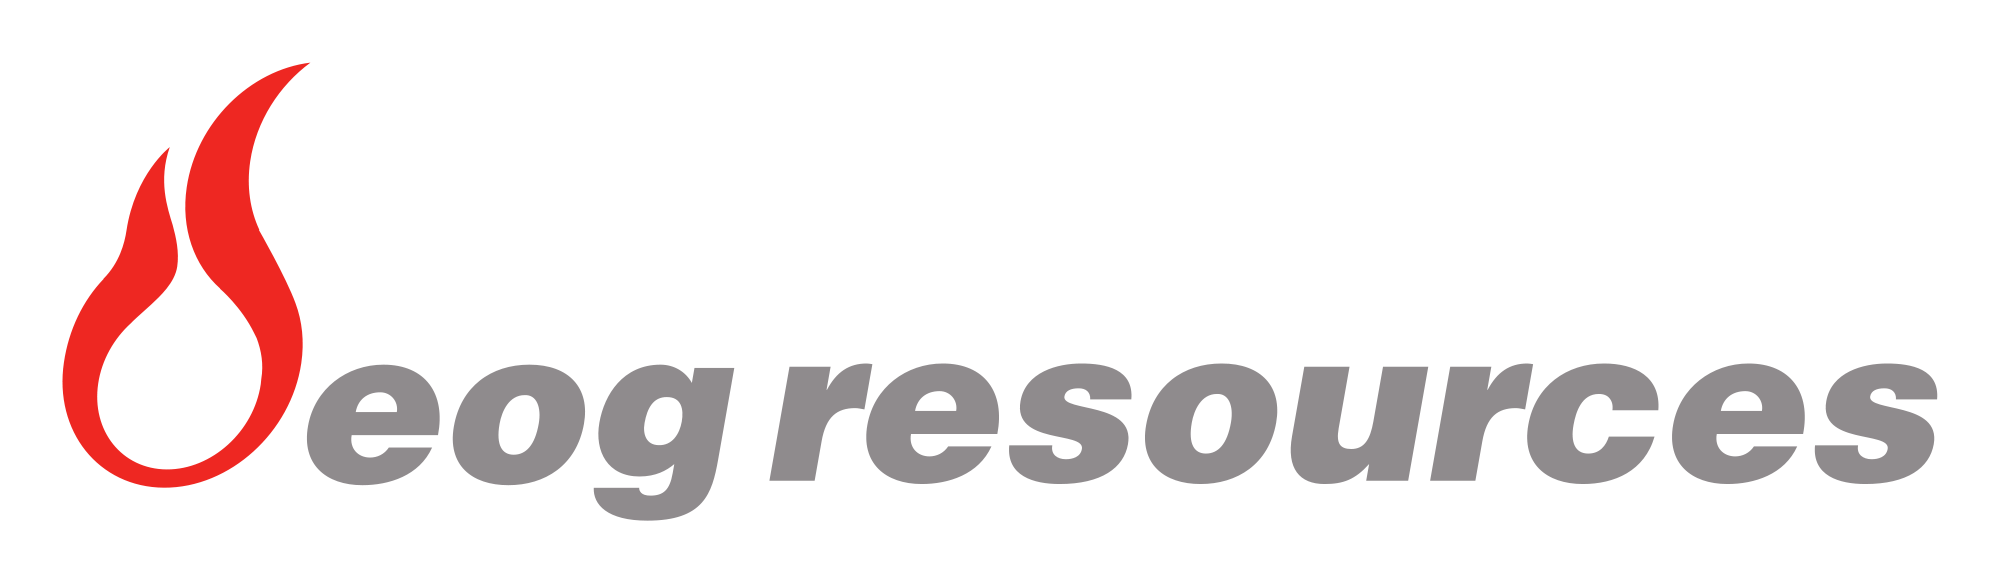 Eog Resources Brand Logo